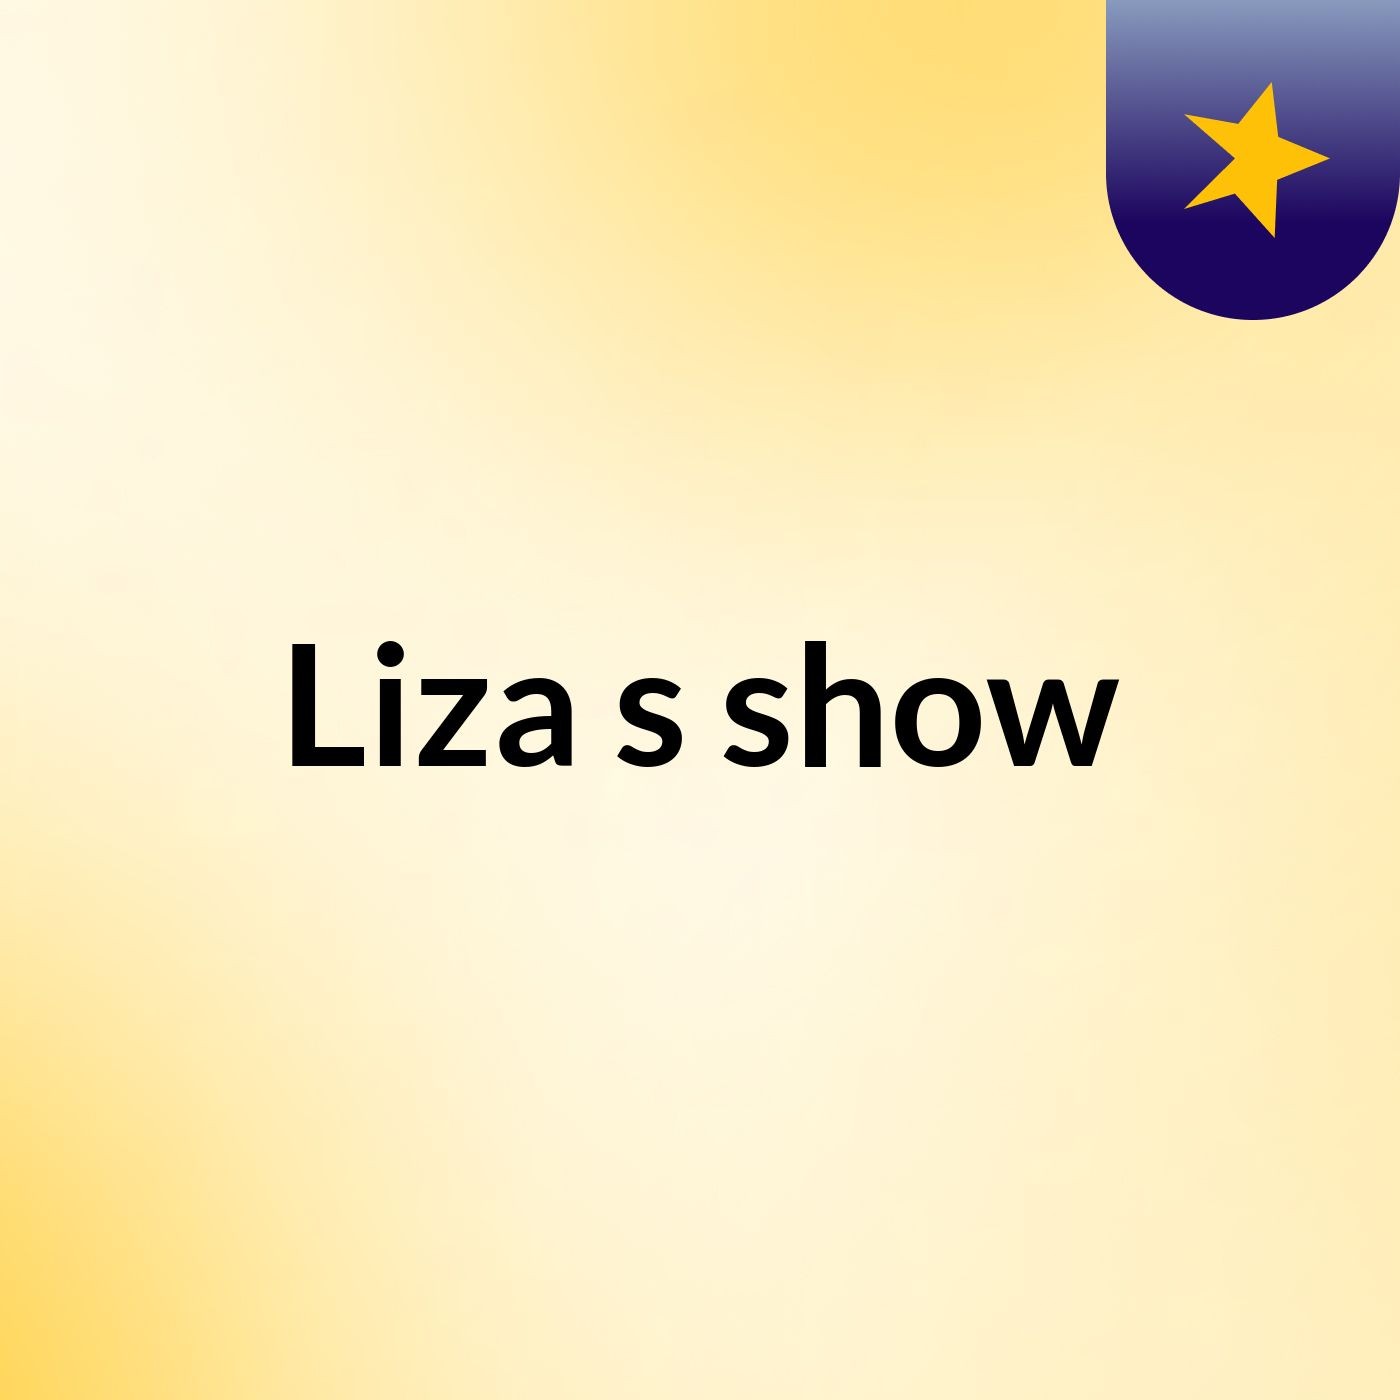 Liza's show